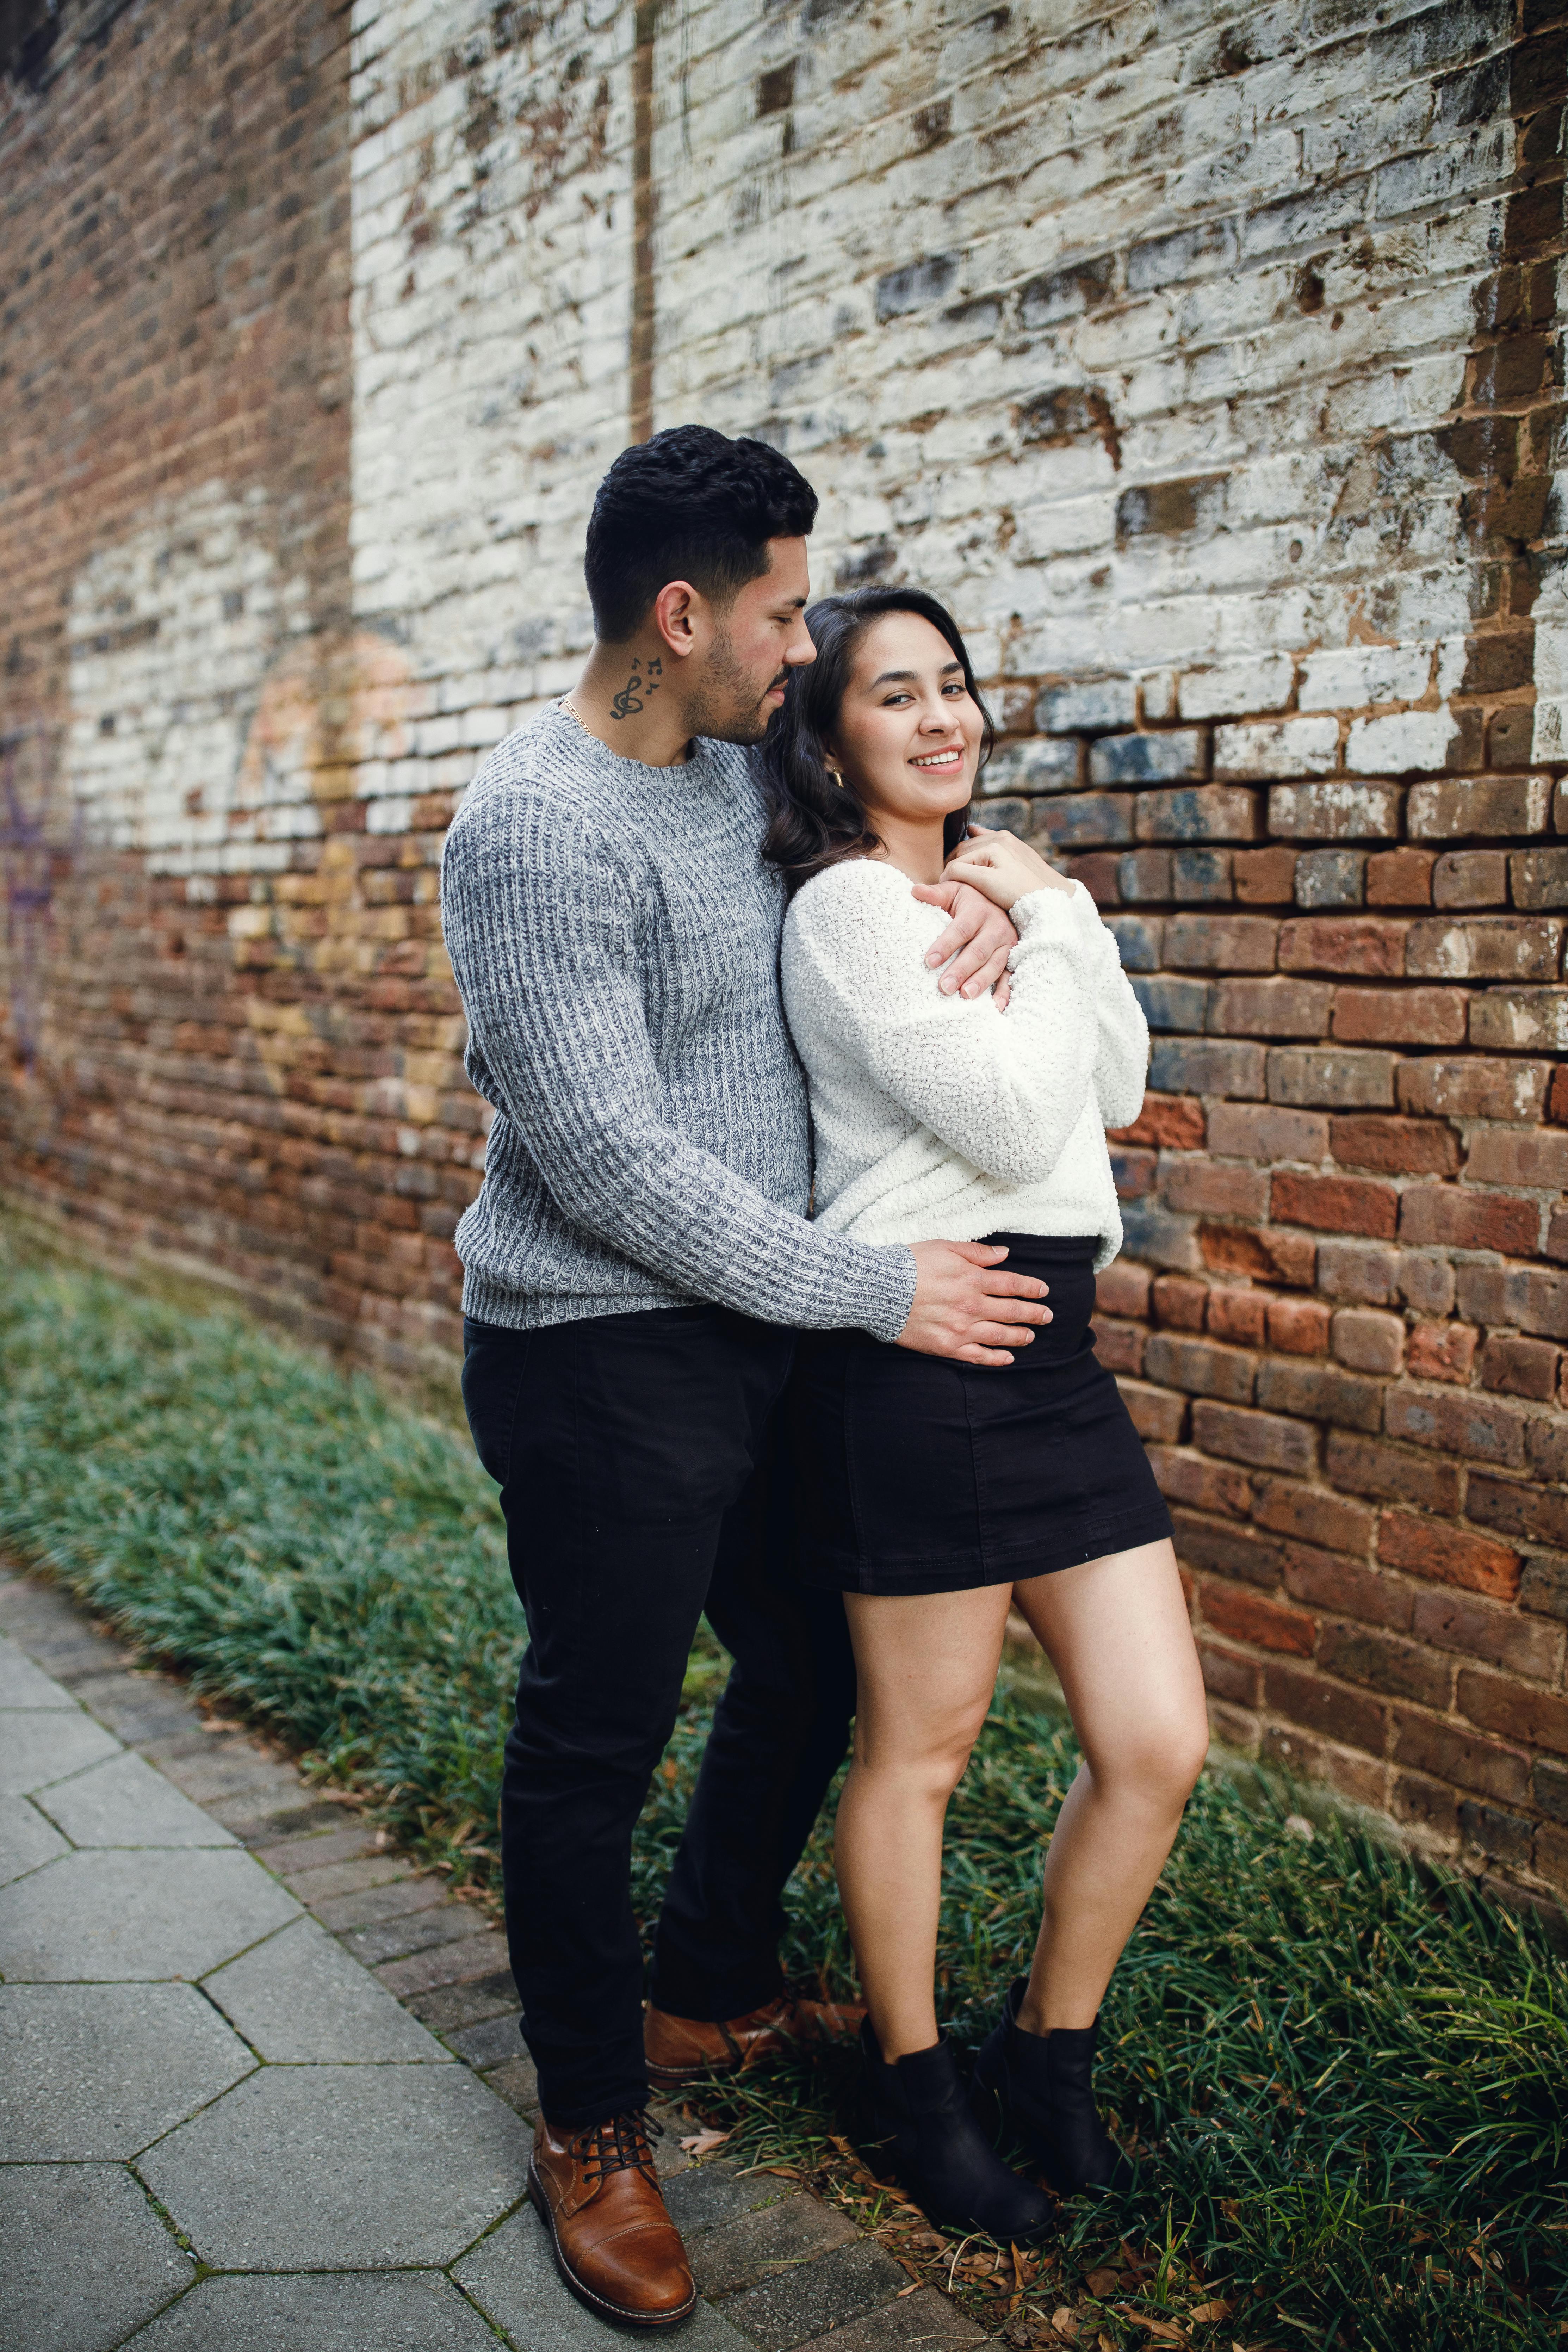 Couple Photo Poses: 7 Romantic Ideas | The Motif Blog